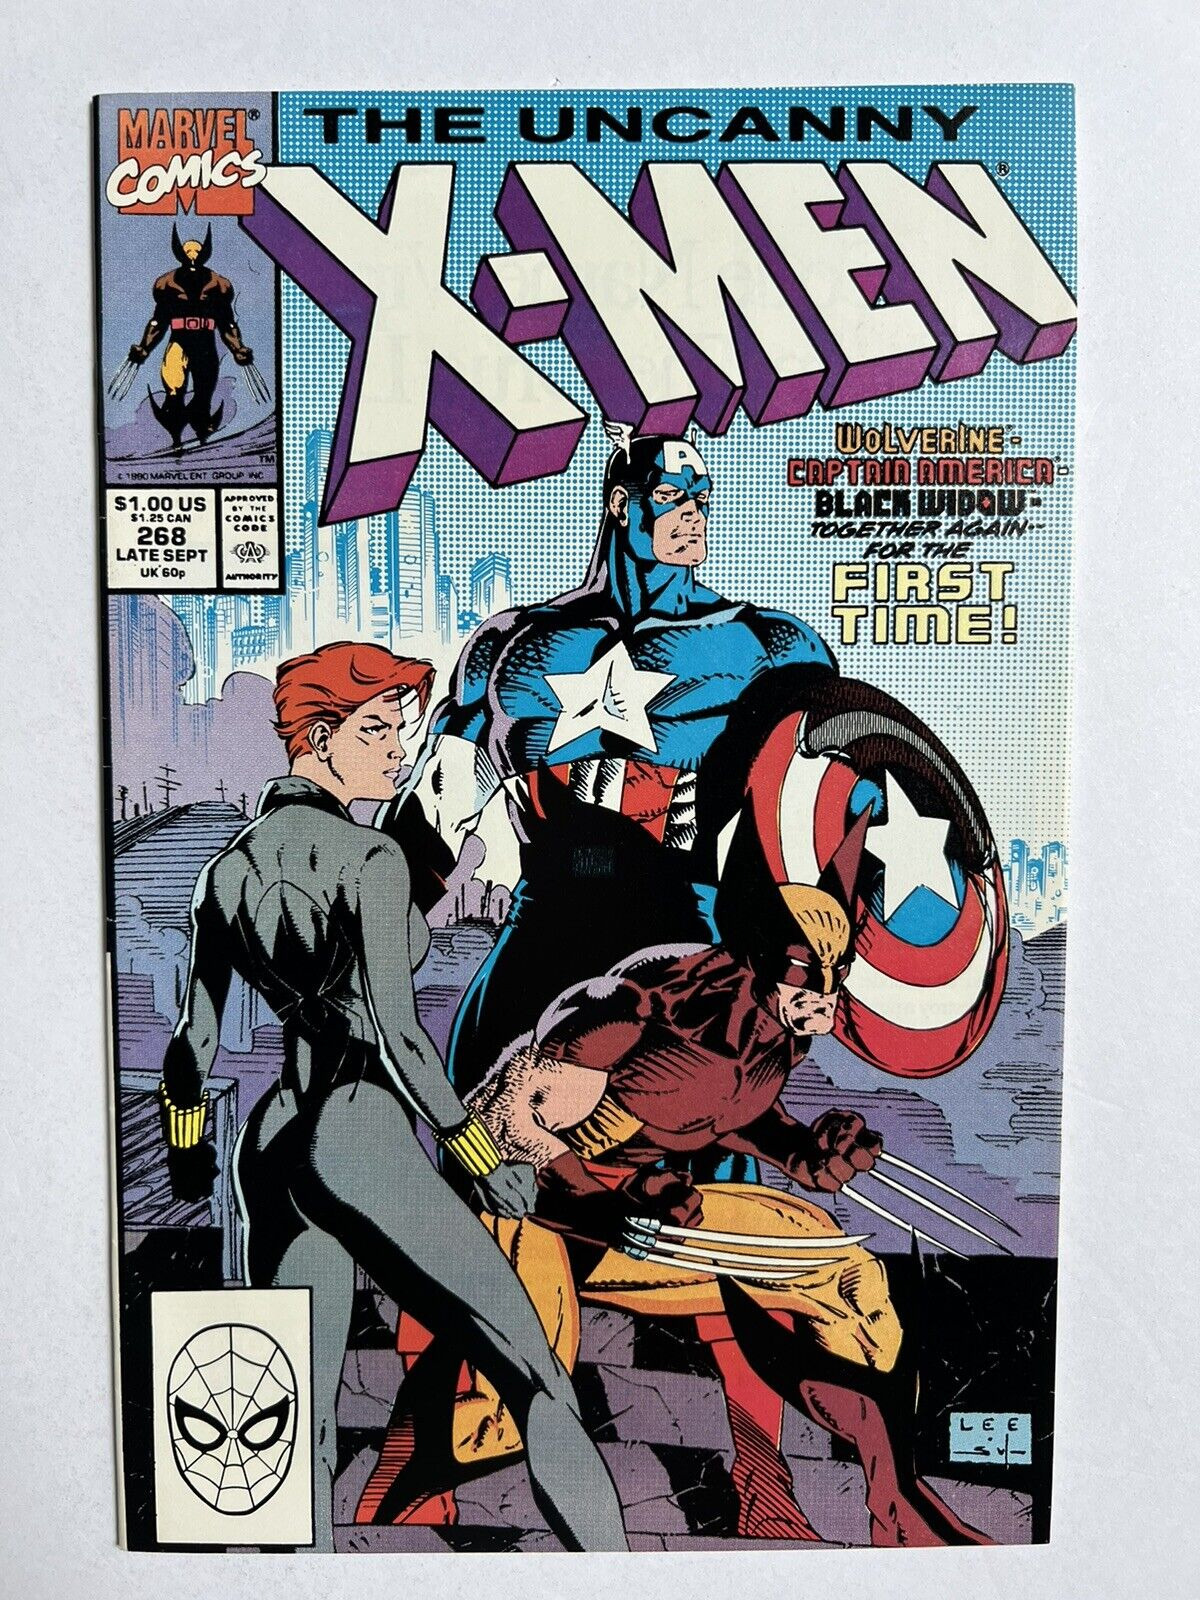 The Uncanny X-Men #268 - Wolverine - Captain America-Black Widow (1990) - Key